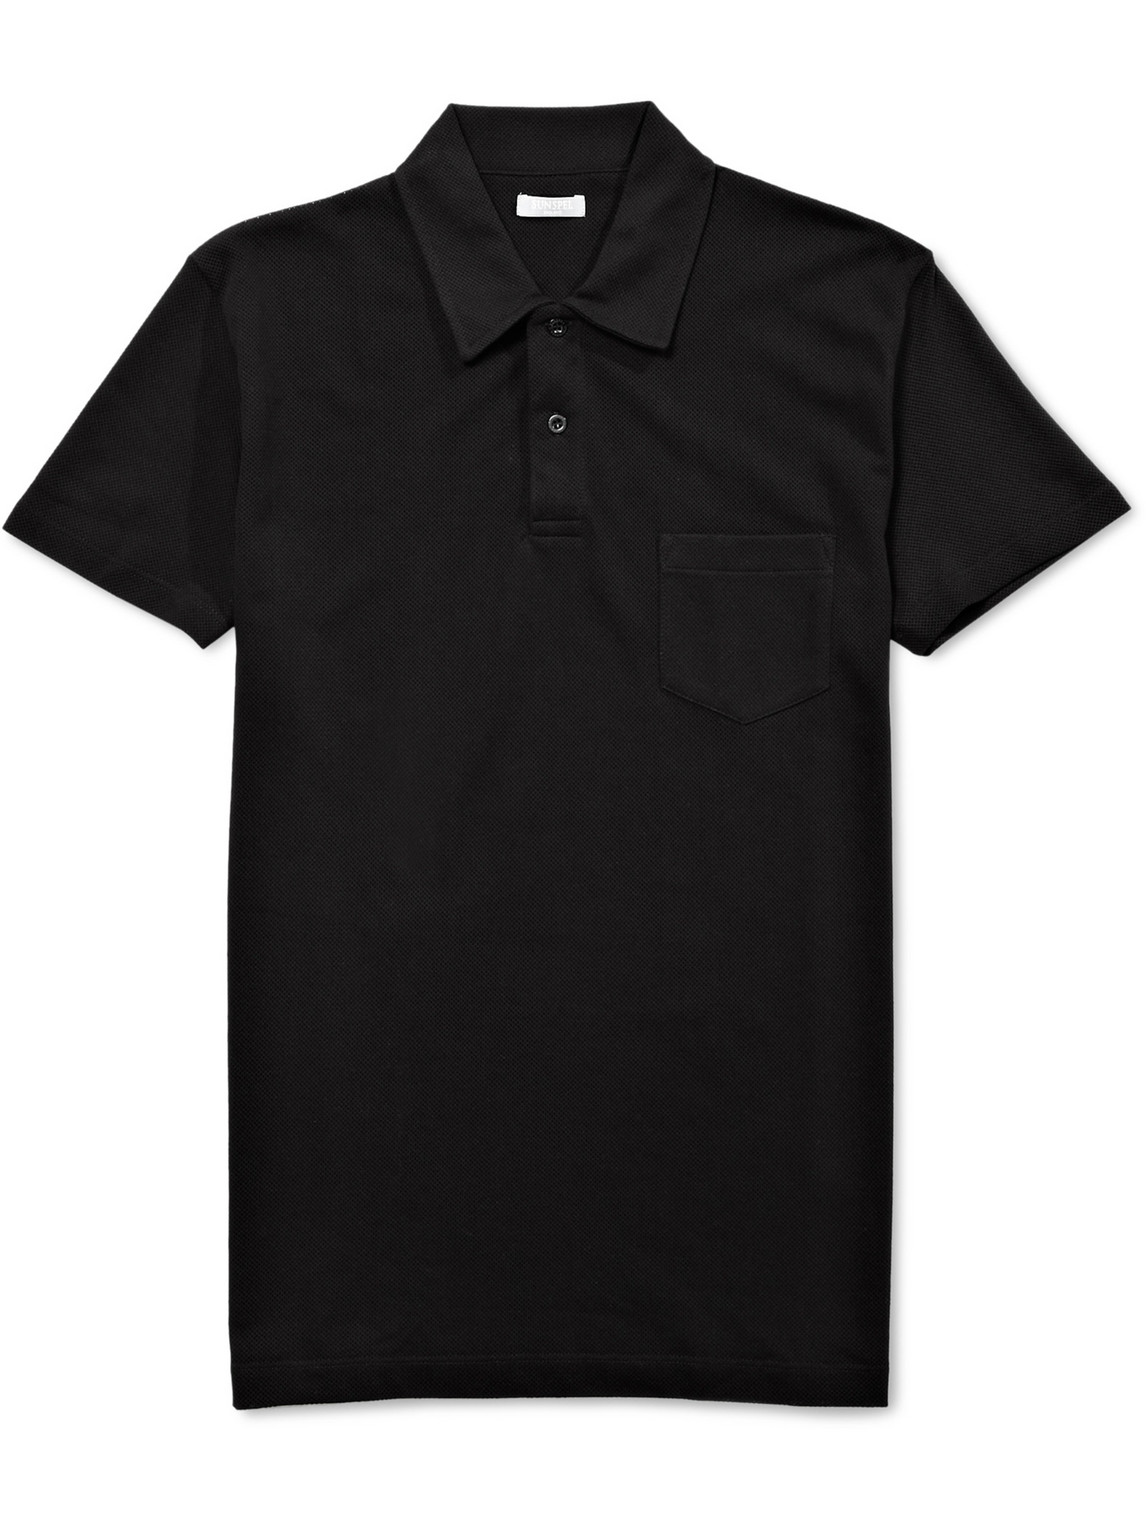 Sunspel - Riviera Slim-Fit Cotton-Mesh Polo Shirt - Men - Black - L von Sunspel